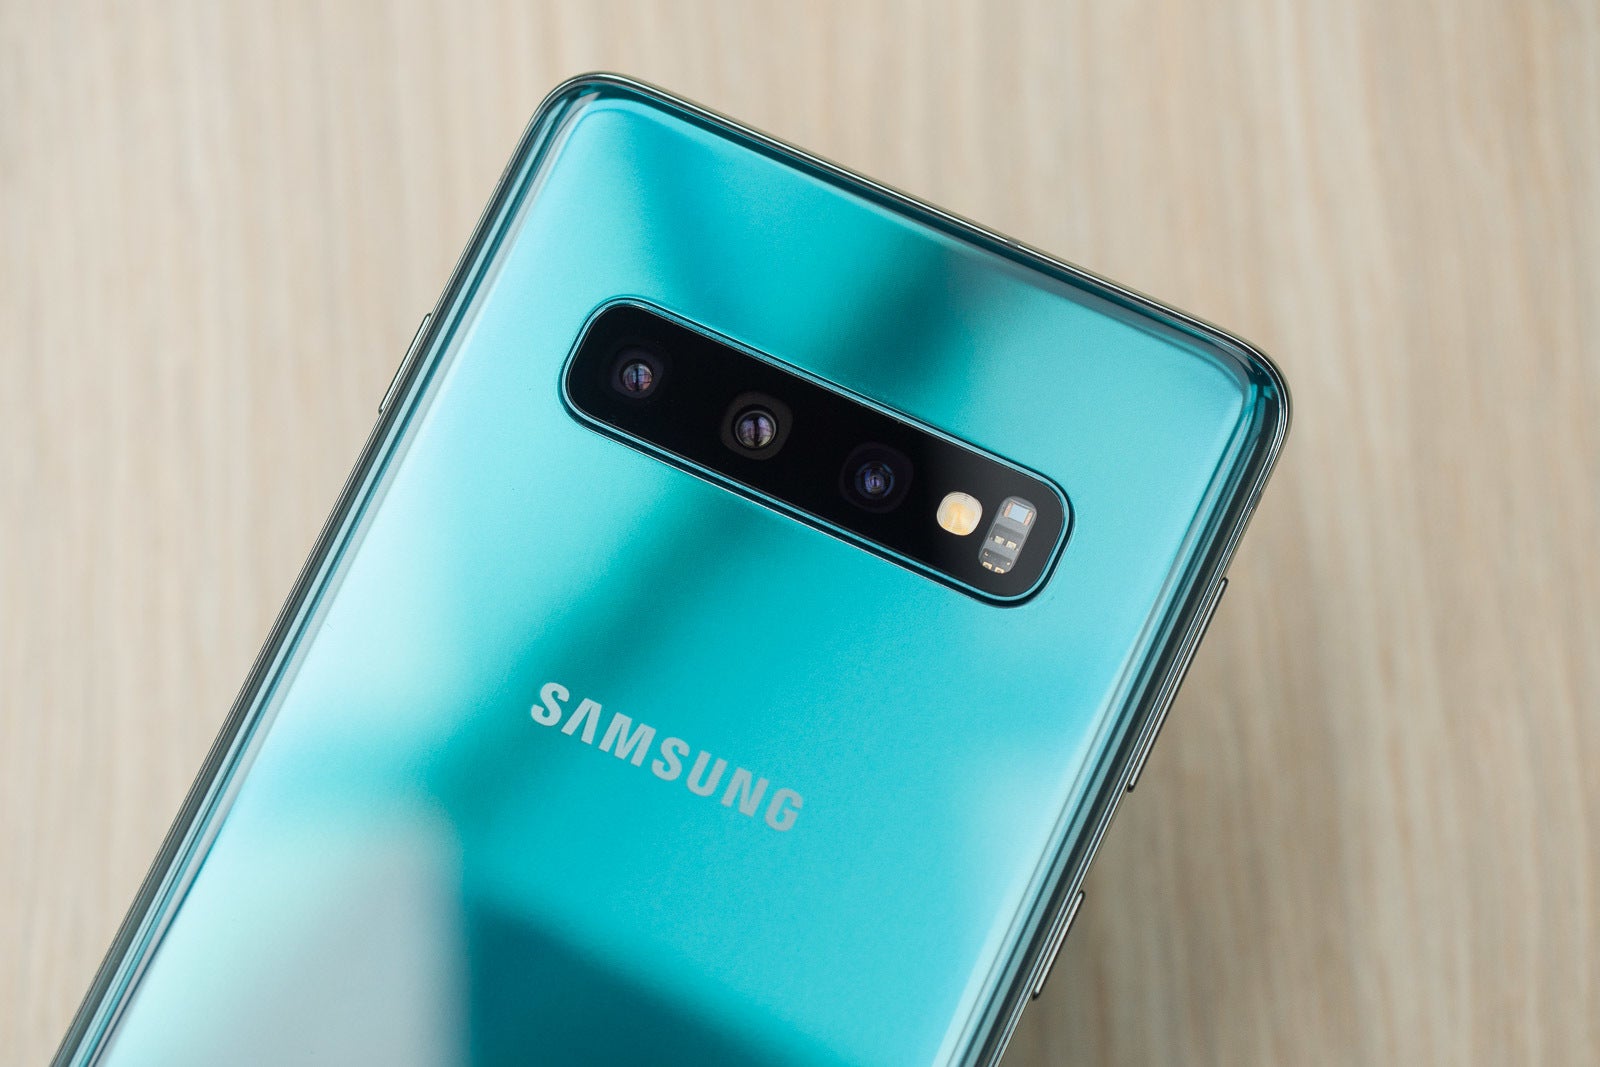 Samsung Galaxy S10 series sales are 31% higher in one European market